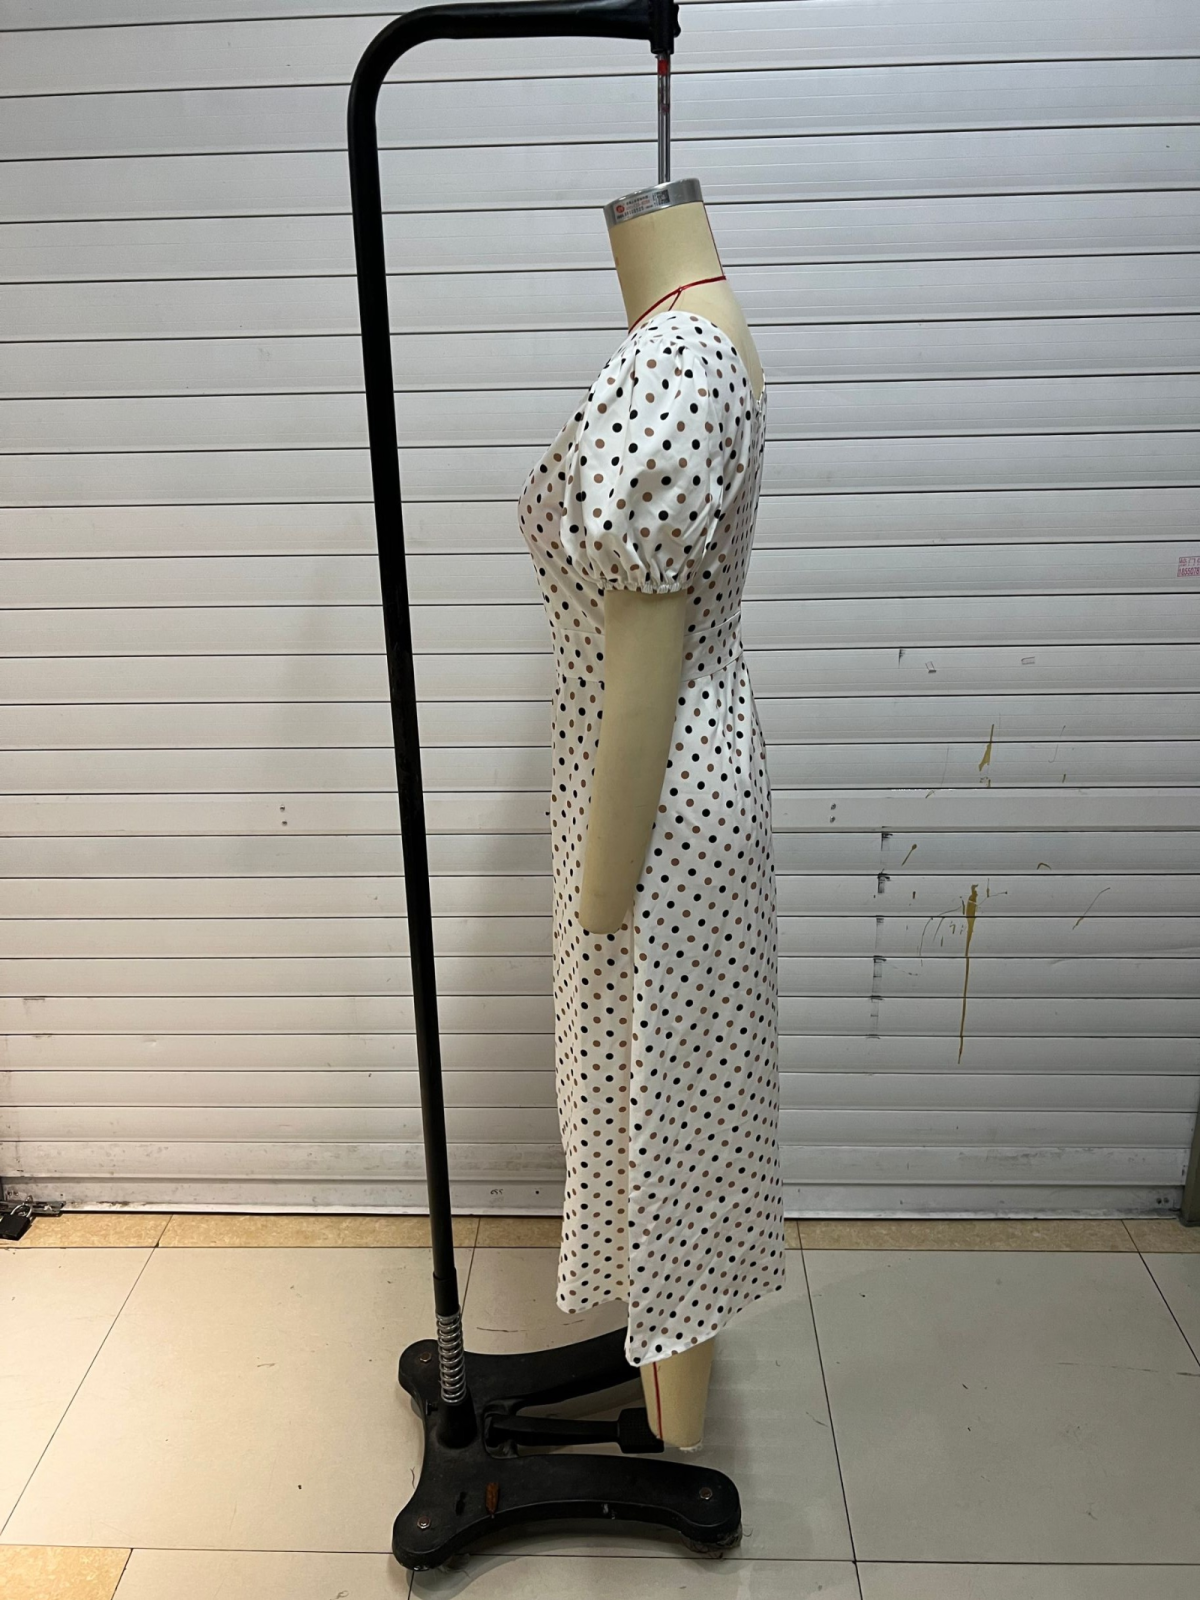 French Polka Dot Dress Women's Short Sleeve Spring Square Collar Slimming Slimming Mid Length Line Dress